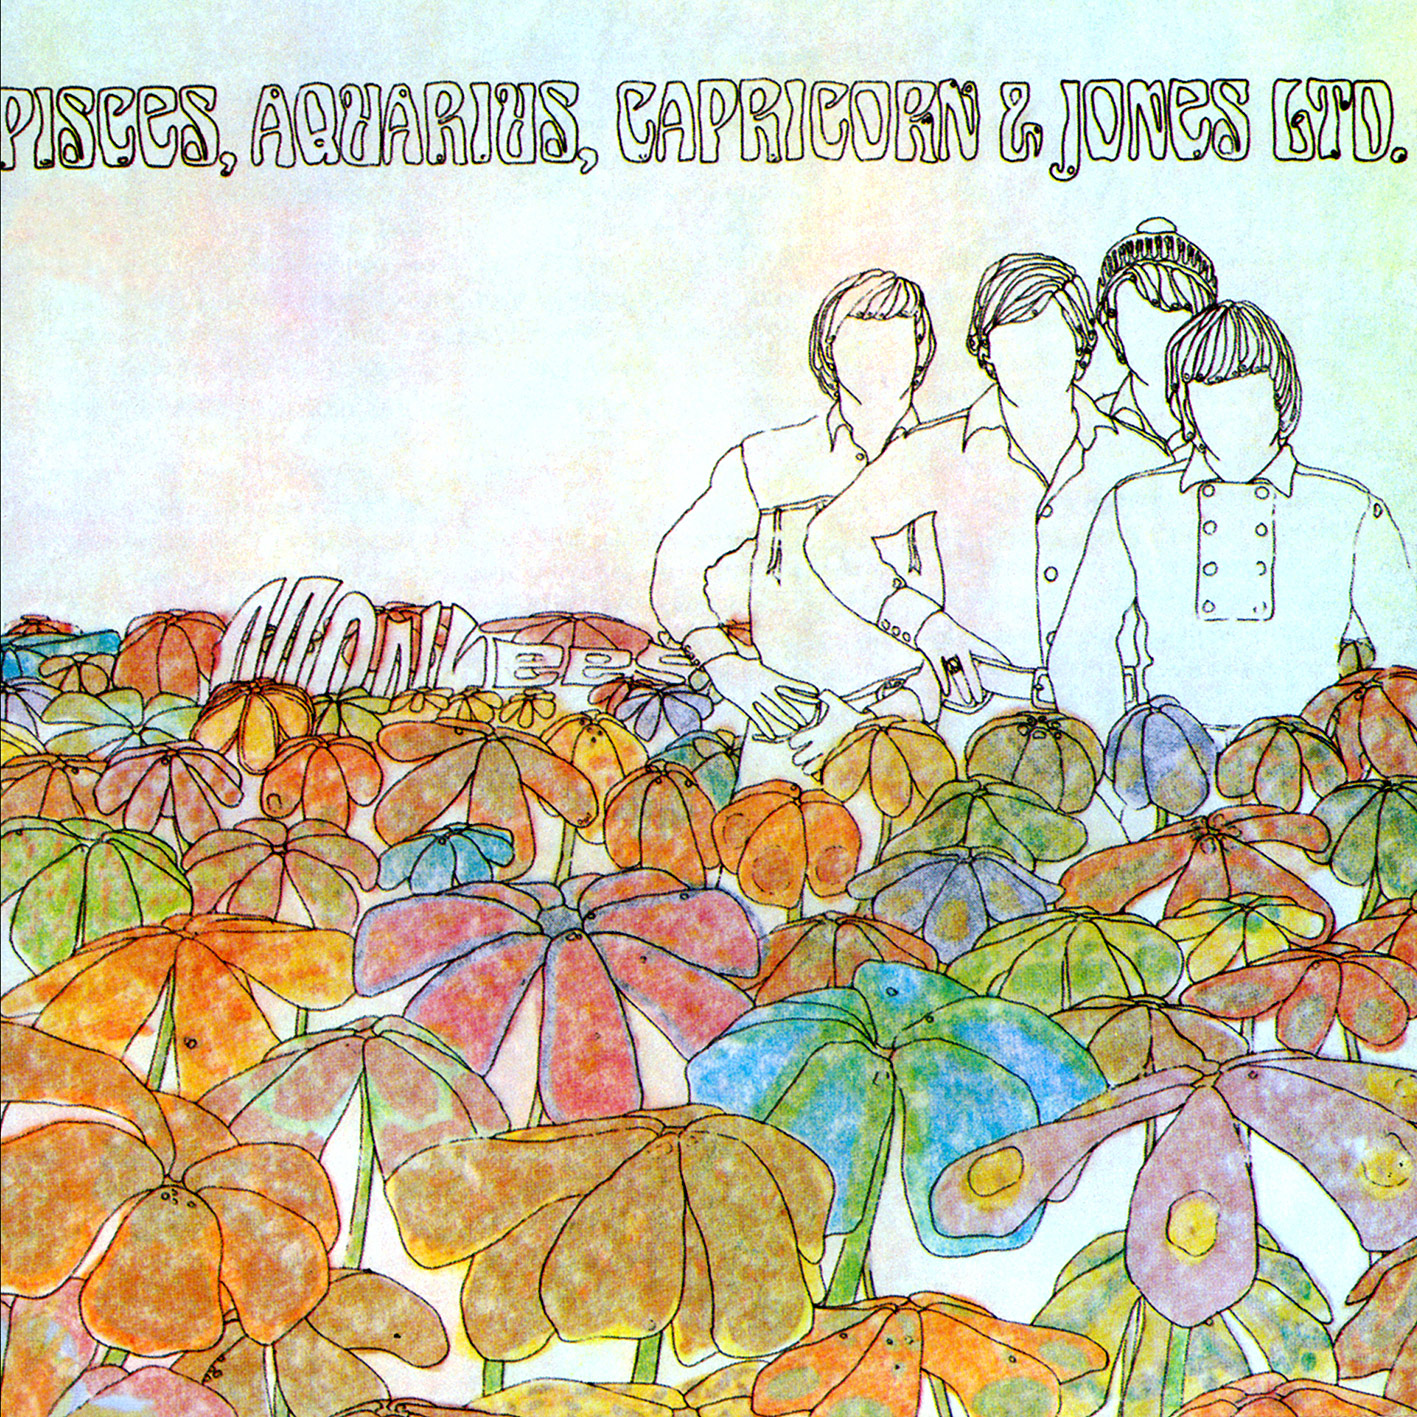 The Monkees – Pisces, Aquarius, Capricorn & Jones Ltd. (1967/2013) [HDTracks FLAC 24bit/96kHz]